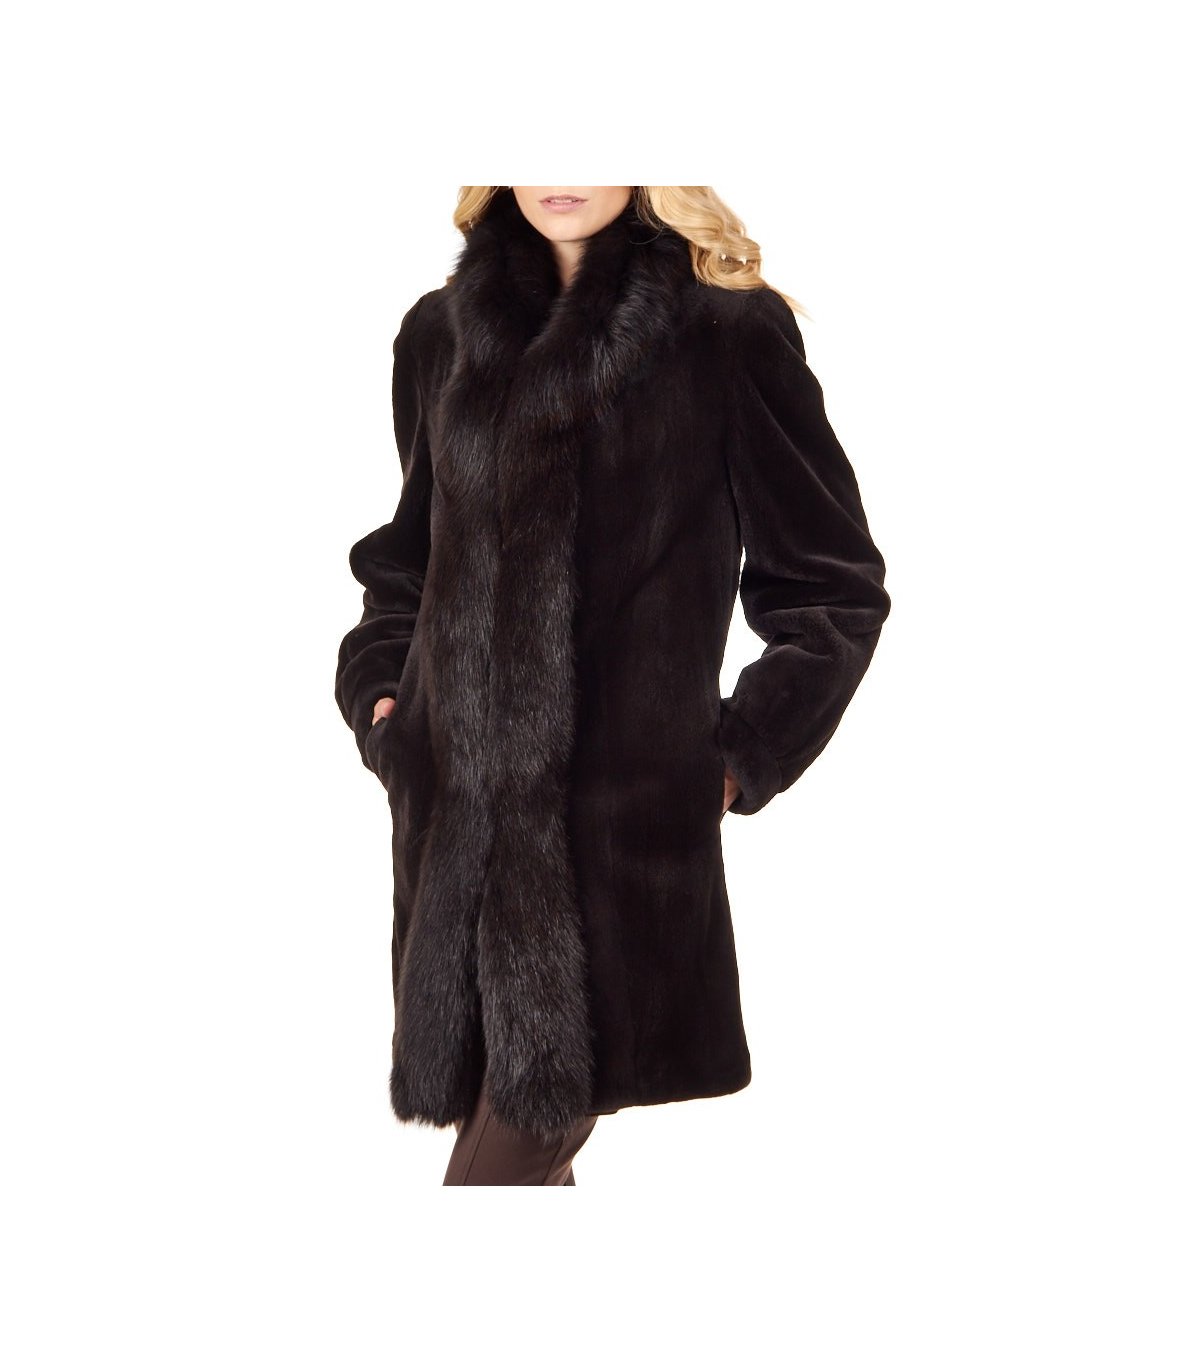 Reversible Sheared Mink Fur Coat with Fox Trim in Brown: FurSource.com